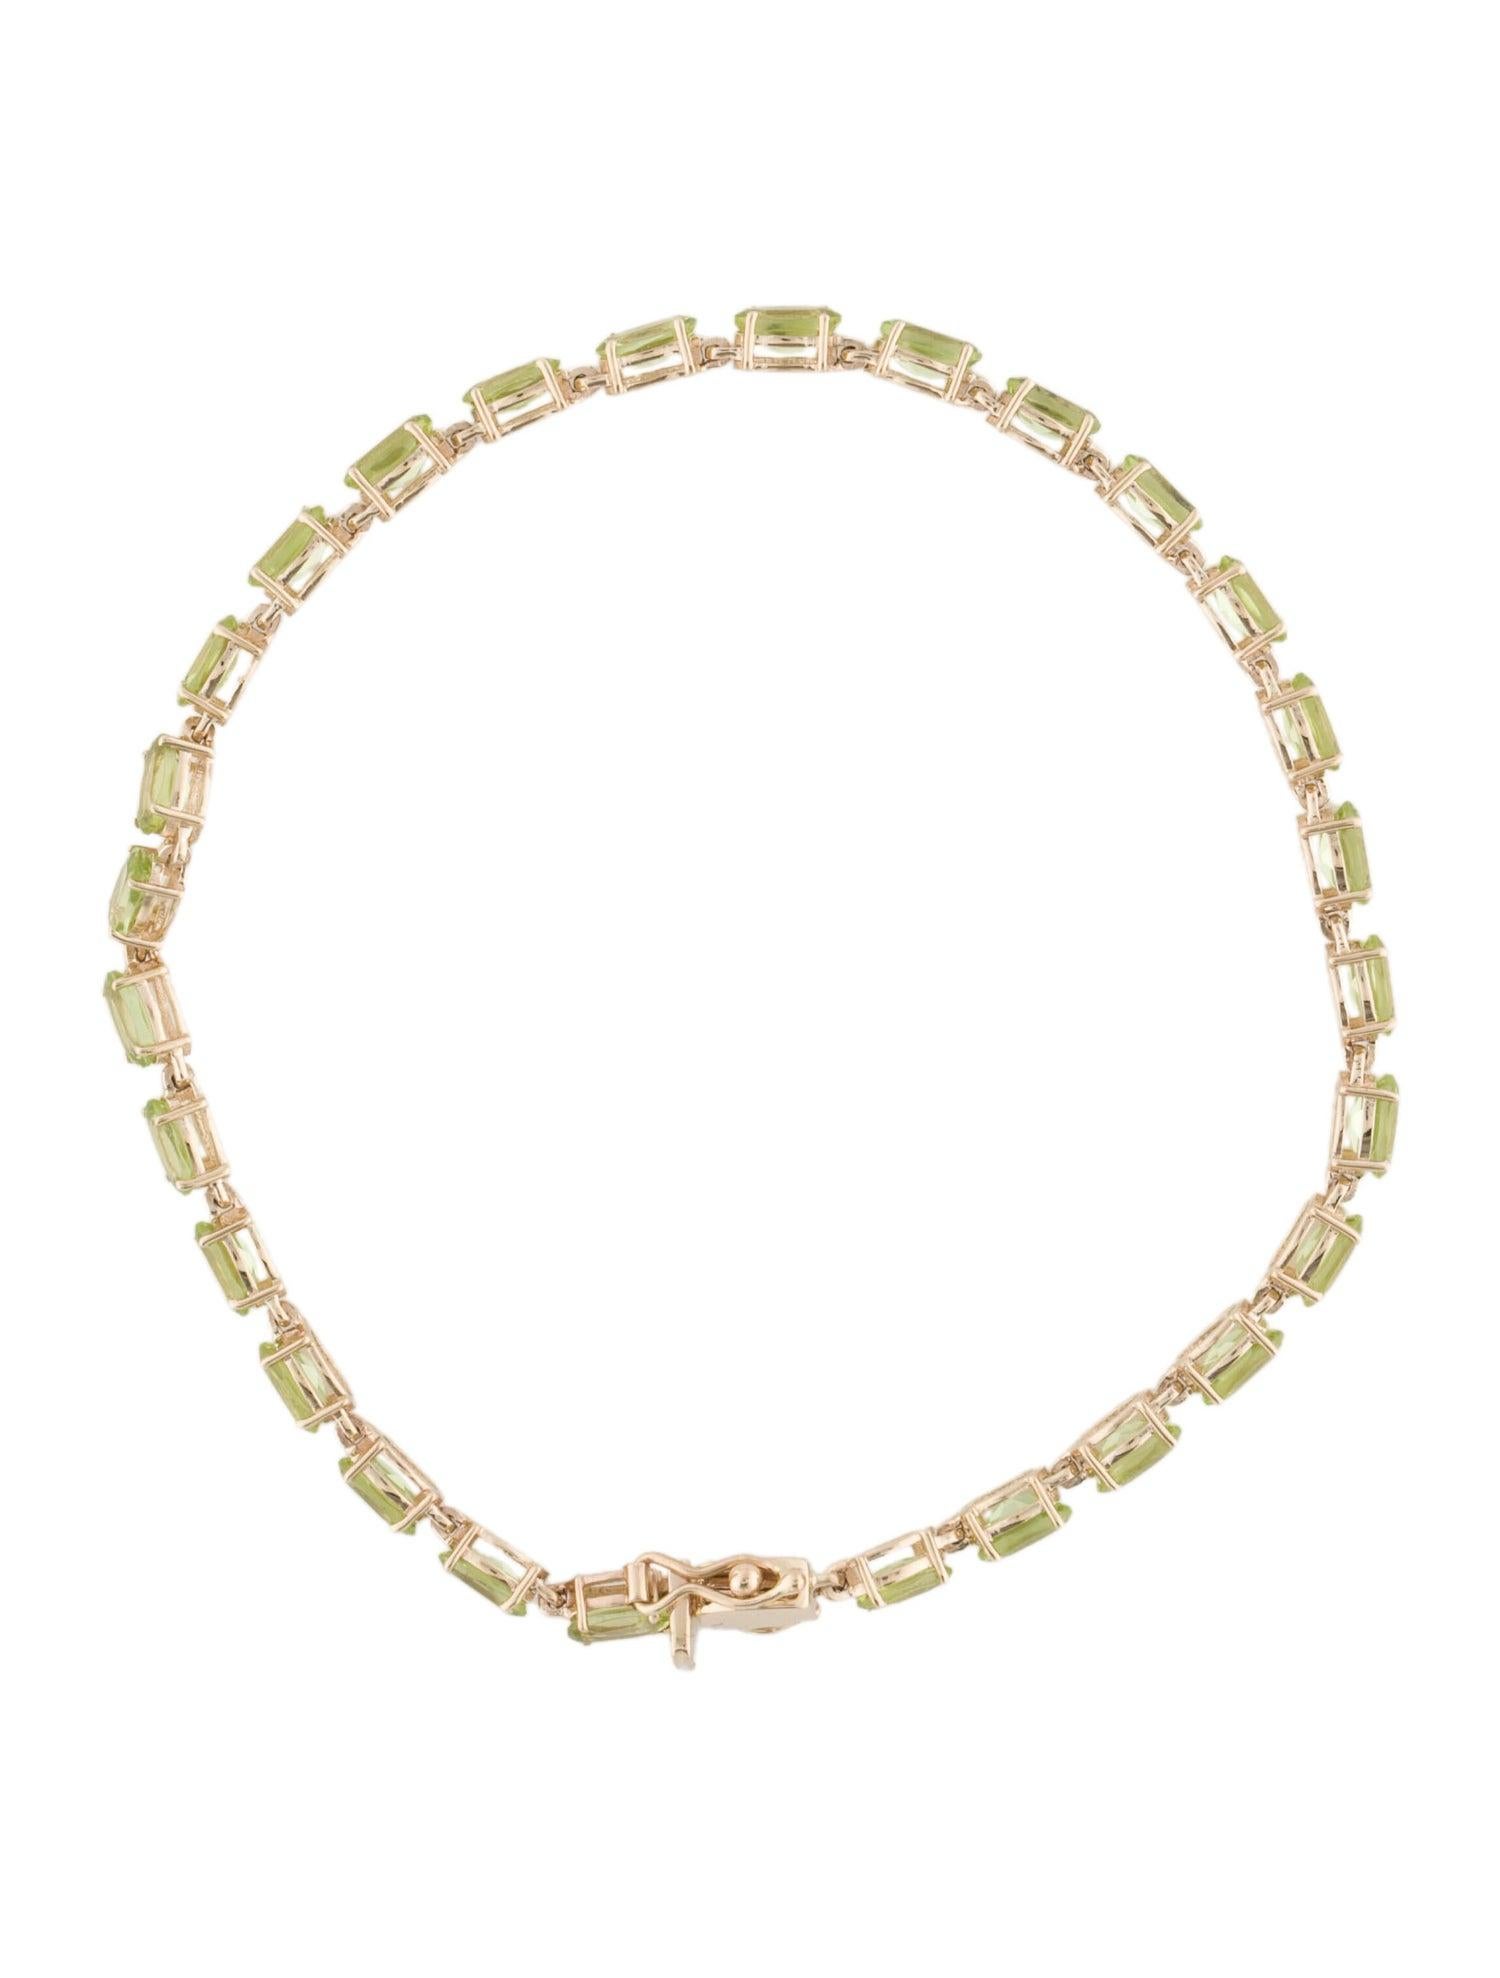 Taille brillant 14K Peridot Link Bracelet - Vibrant Gemstone Elegance, Timeless Luxury Design en vente